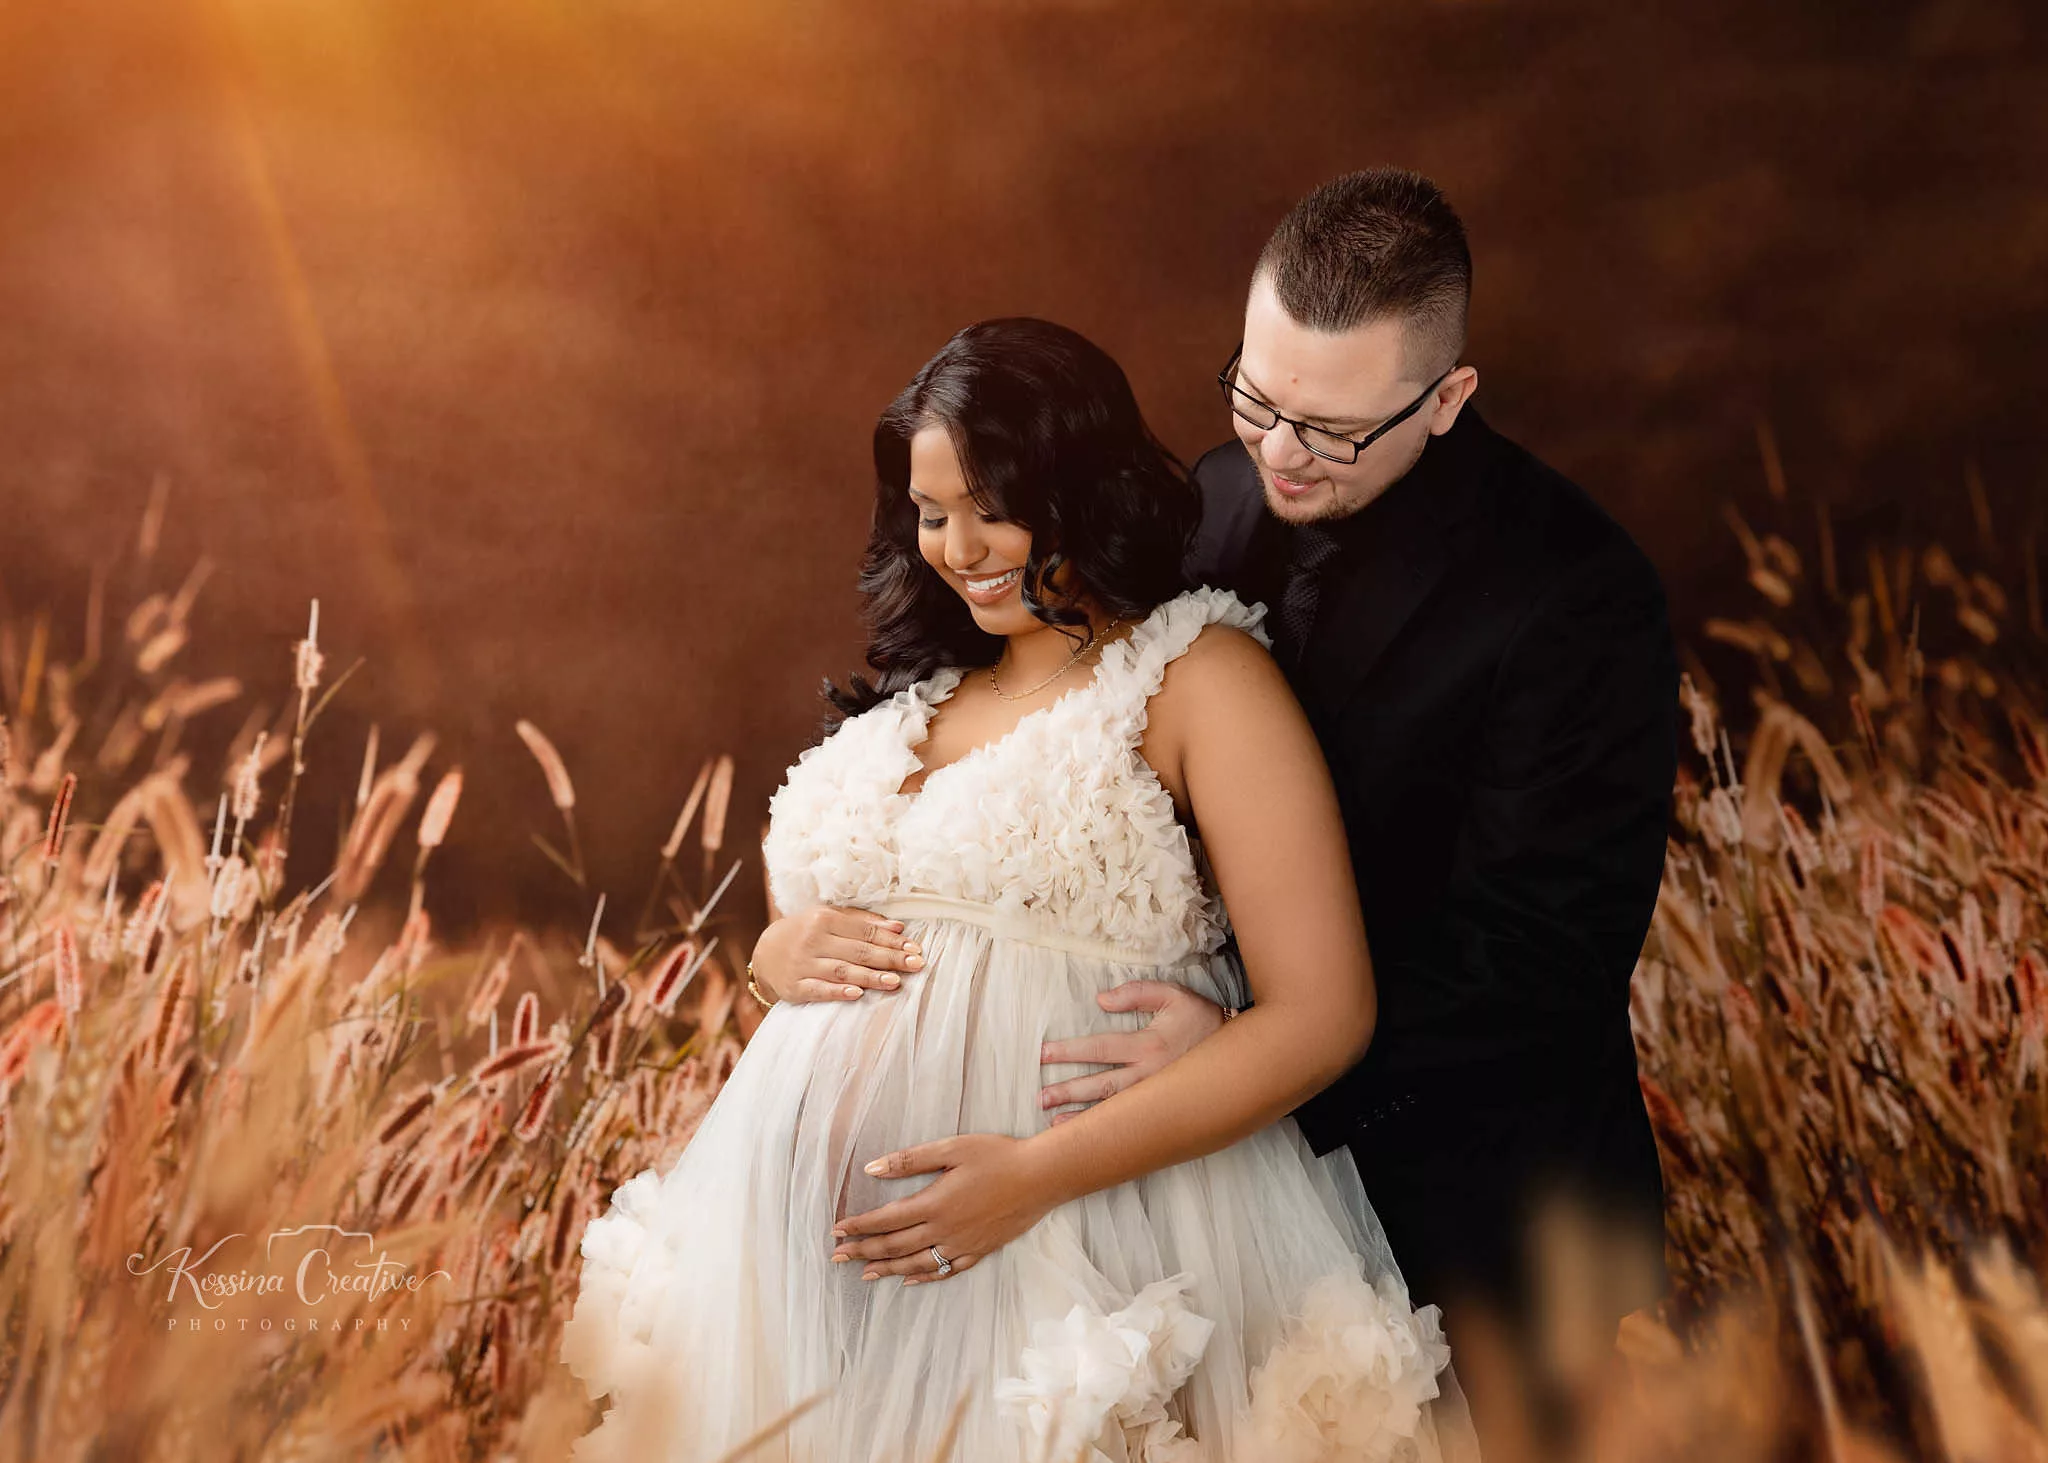 Orlando Maternity Photographer Photo Studio studio wheat field white dress